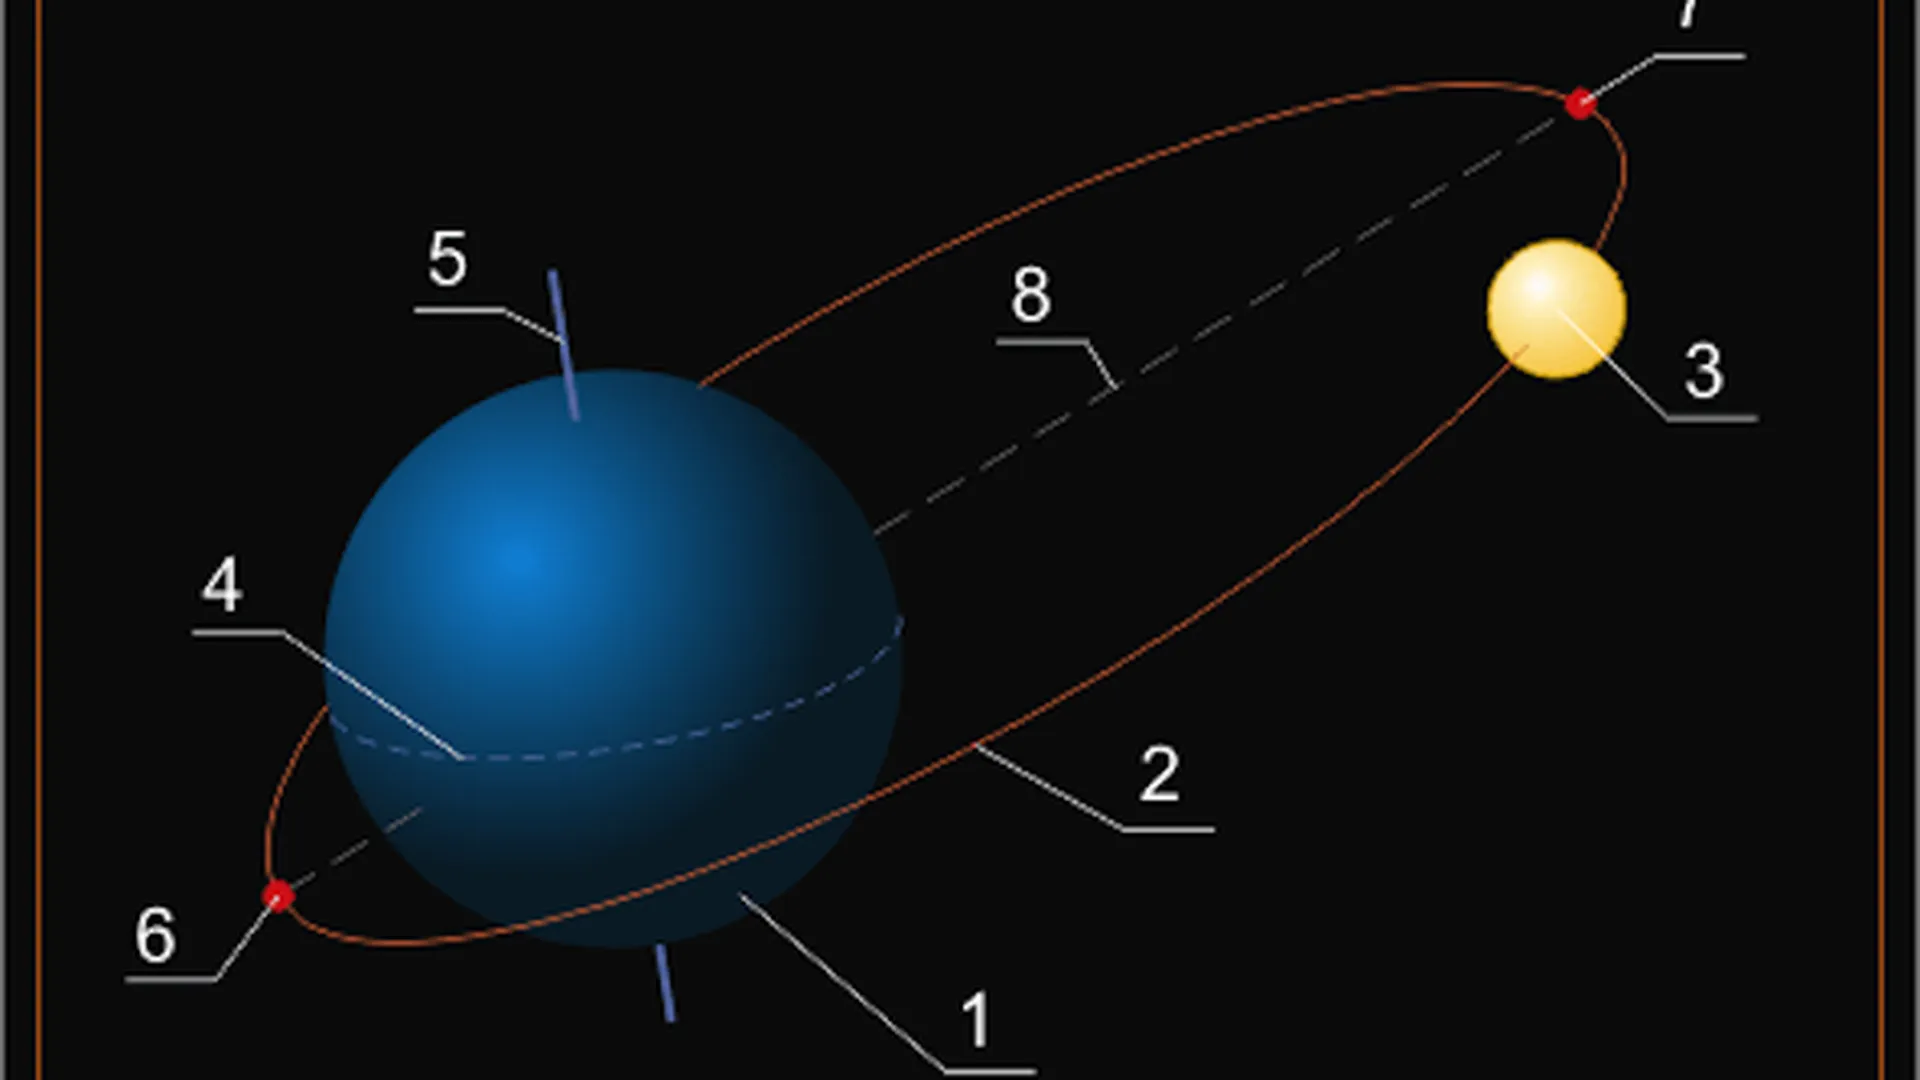 1 — Земля. 2 — орбита спутника. 3 — спутник Земли. 4 — линия земного экватора. 5 — ось вращения Земли. 6 — перигей. 7 — апогей. 8 — линия апсид